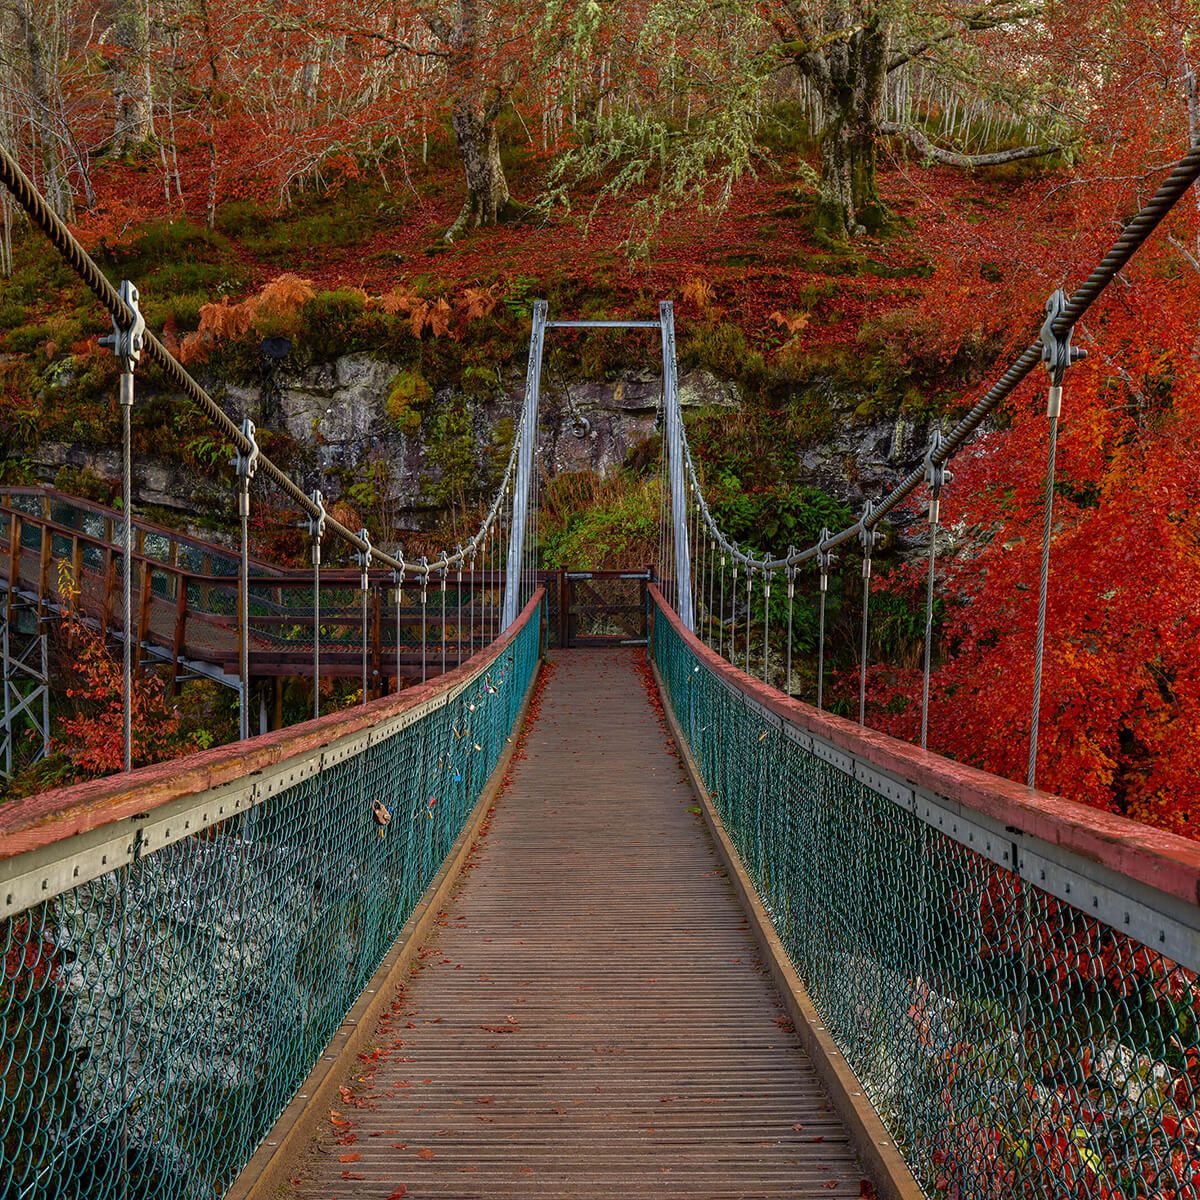 Bridge in autumn setting